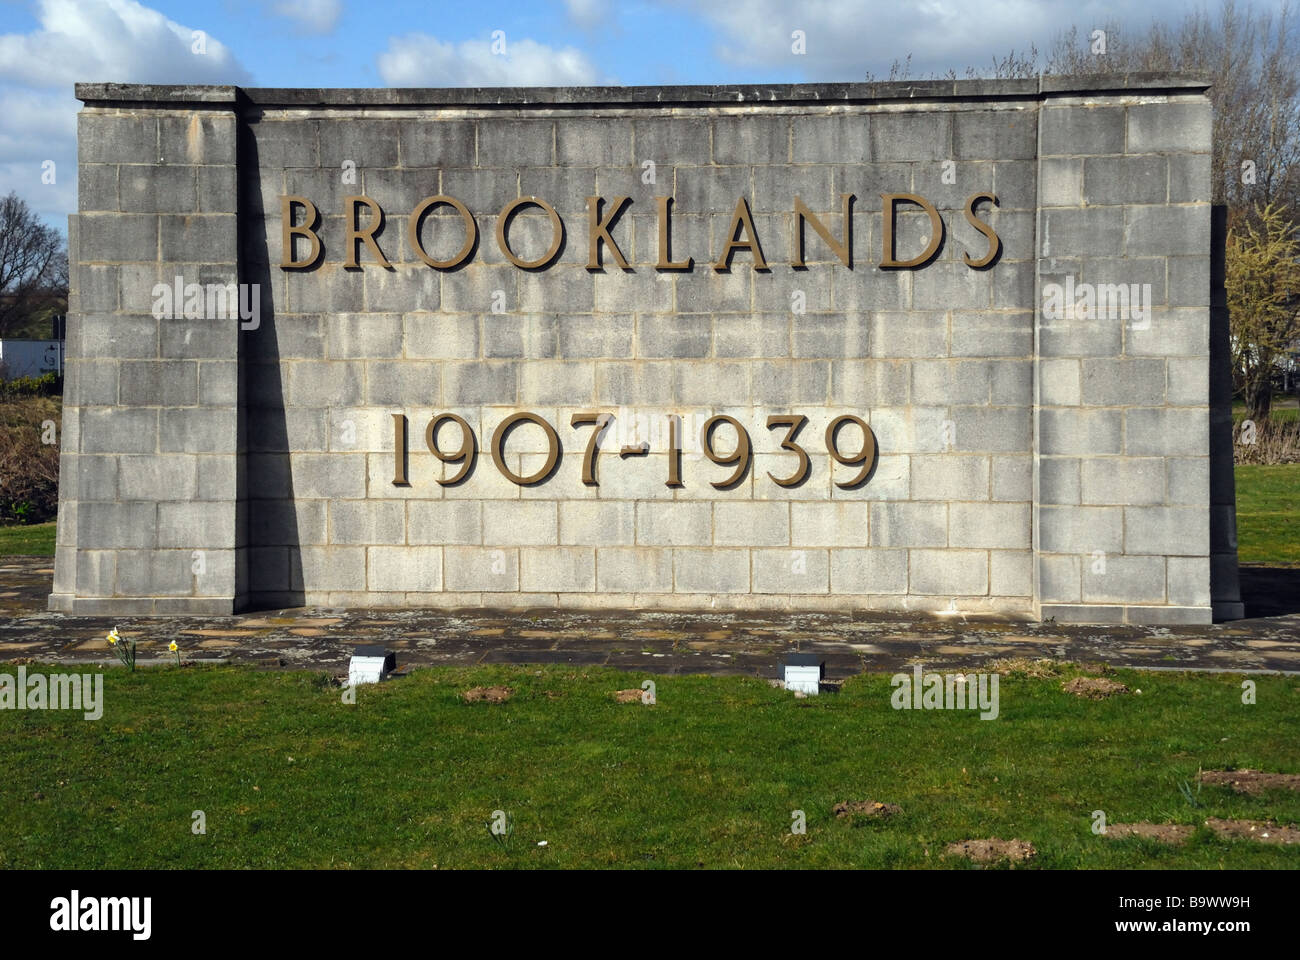 Original Brooklands 1907 1939 sign Brooklands Museum Brooklands Road Weybridge Surrey KT13 0QP Tel 01932 857381 Fax 01932 855465 Stock Photo